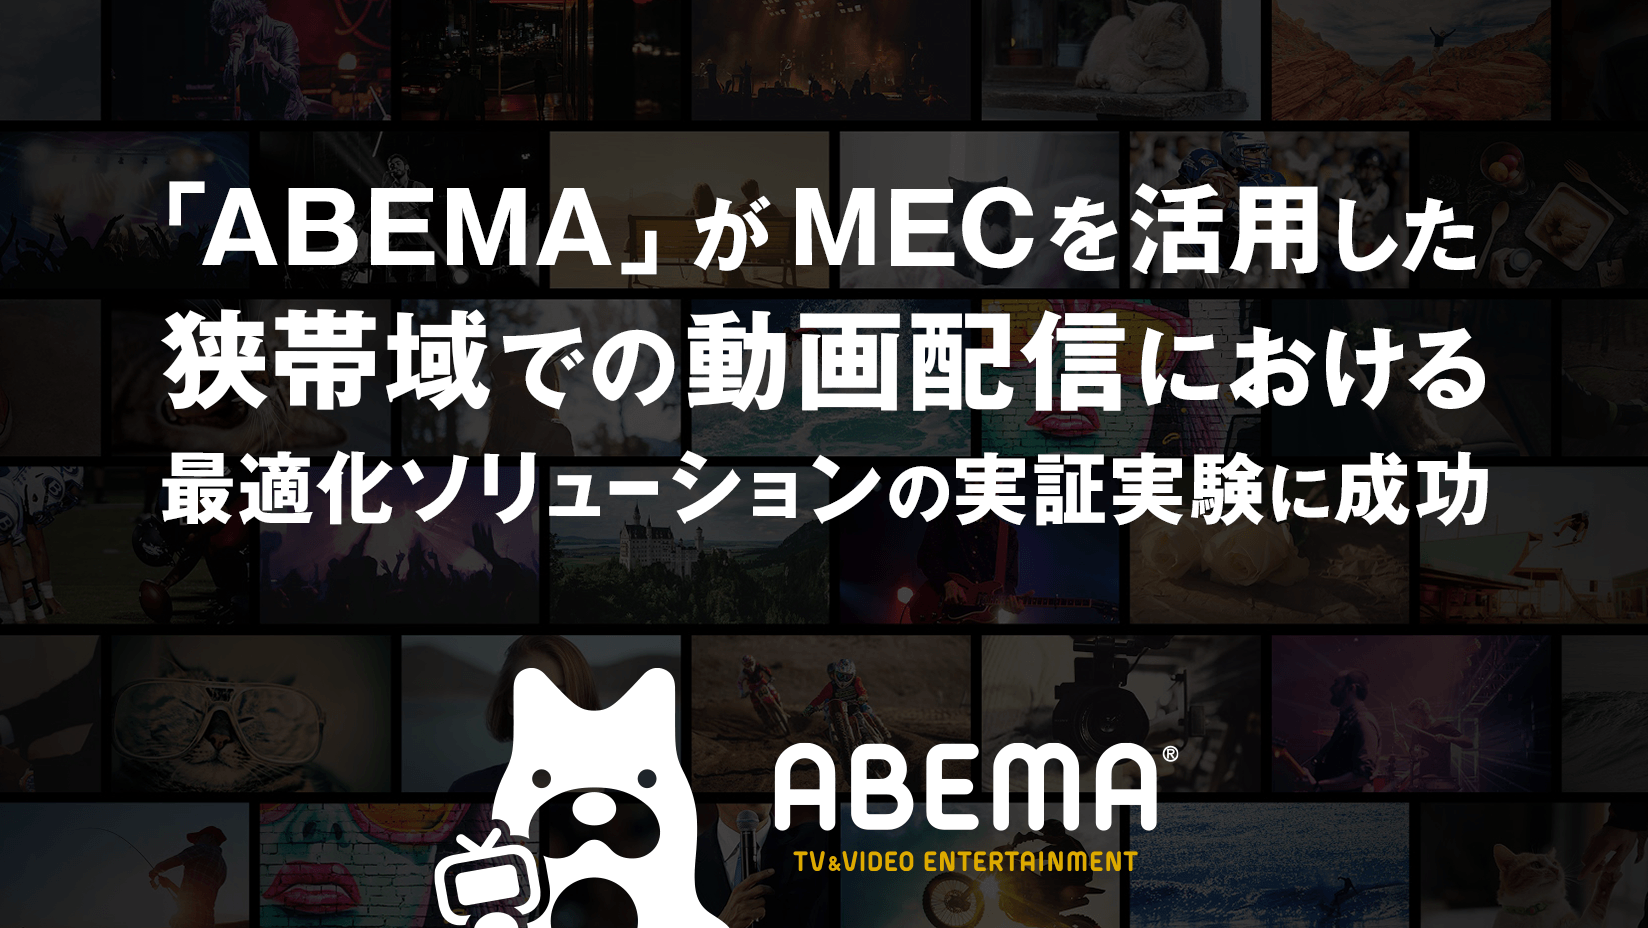 Abema がf5とソフトバンクとともに Mecを活用した狭帯域での動画配信における最適化ソリューションの実証実験に成功 株式会社abematv